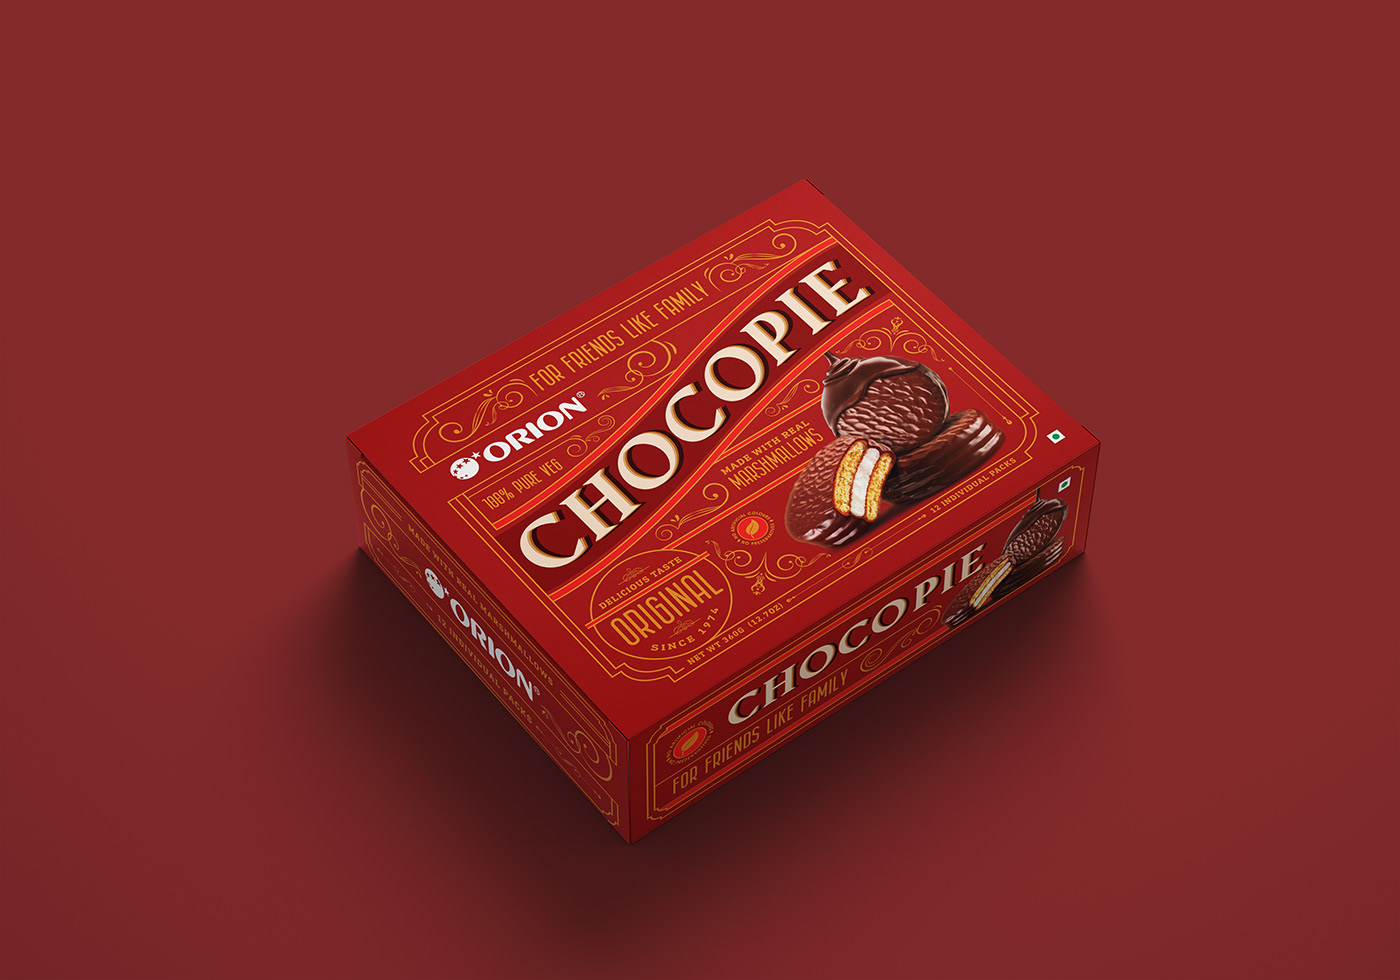 box chocolate chocopie marshmallows Original orion package packaging design pie festive